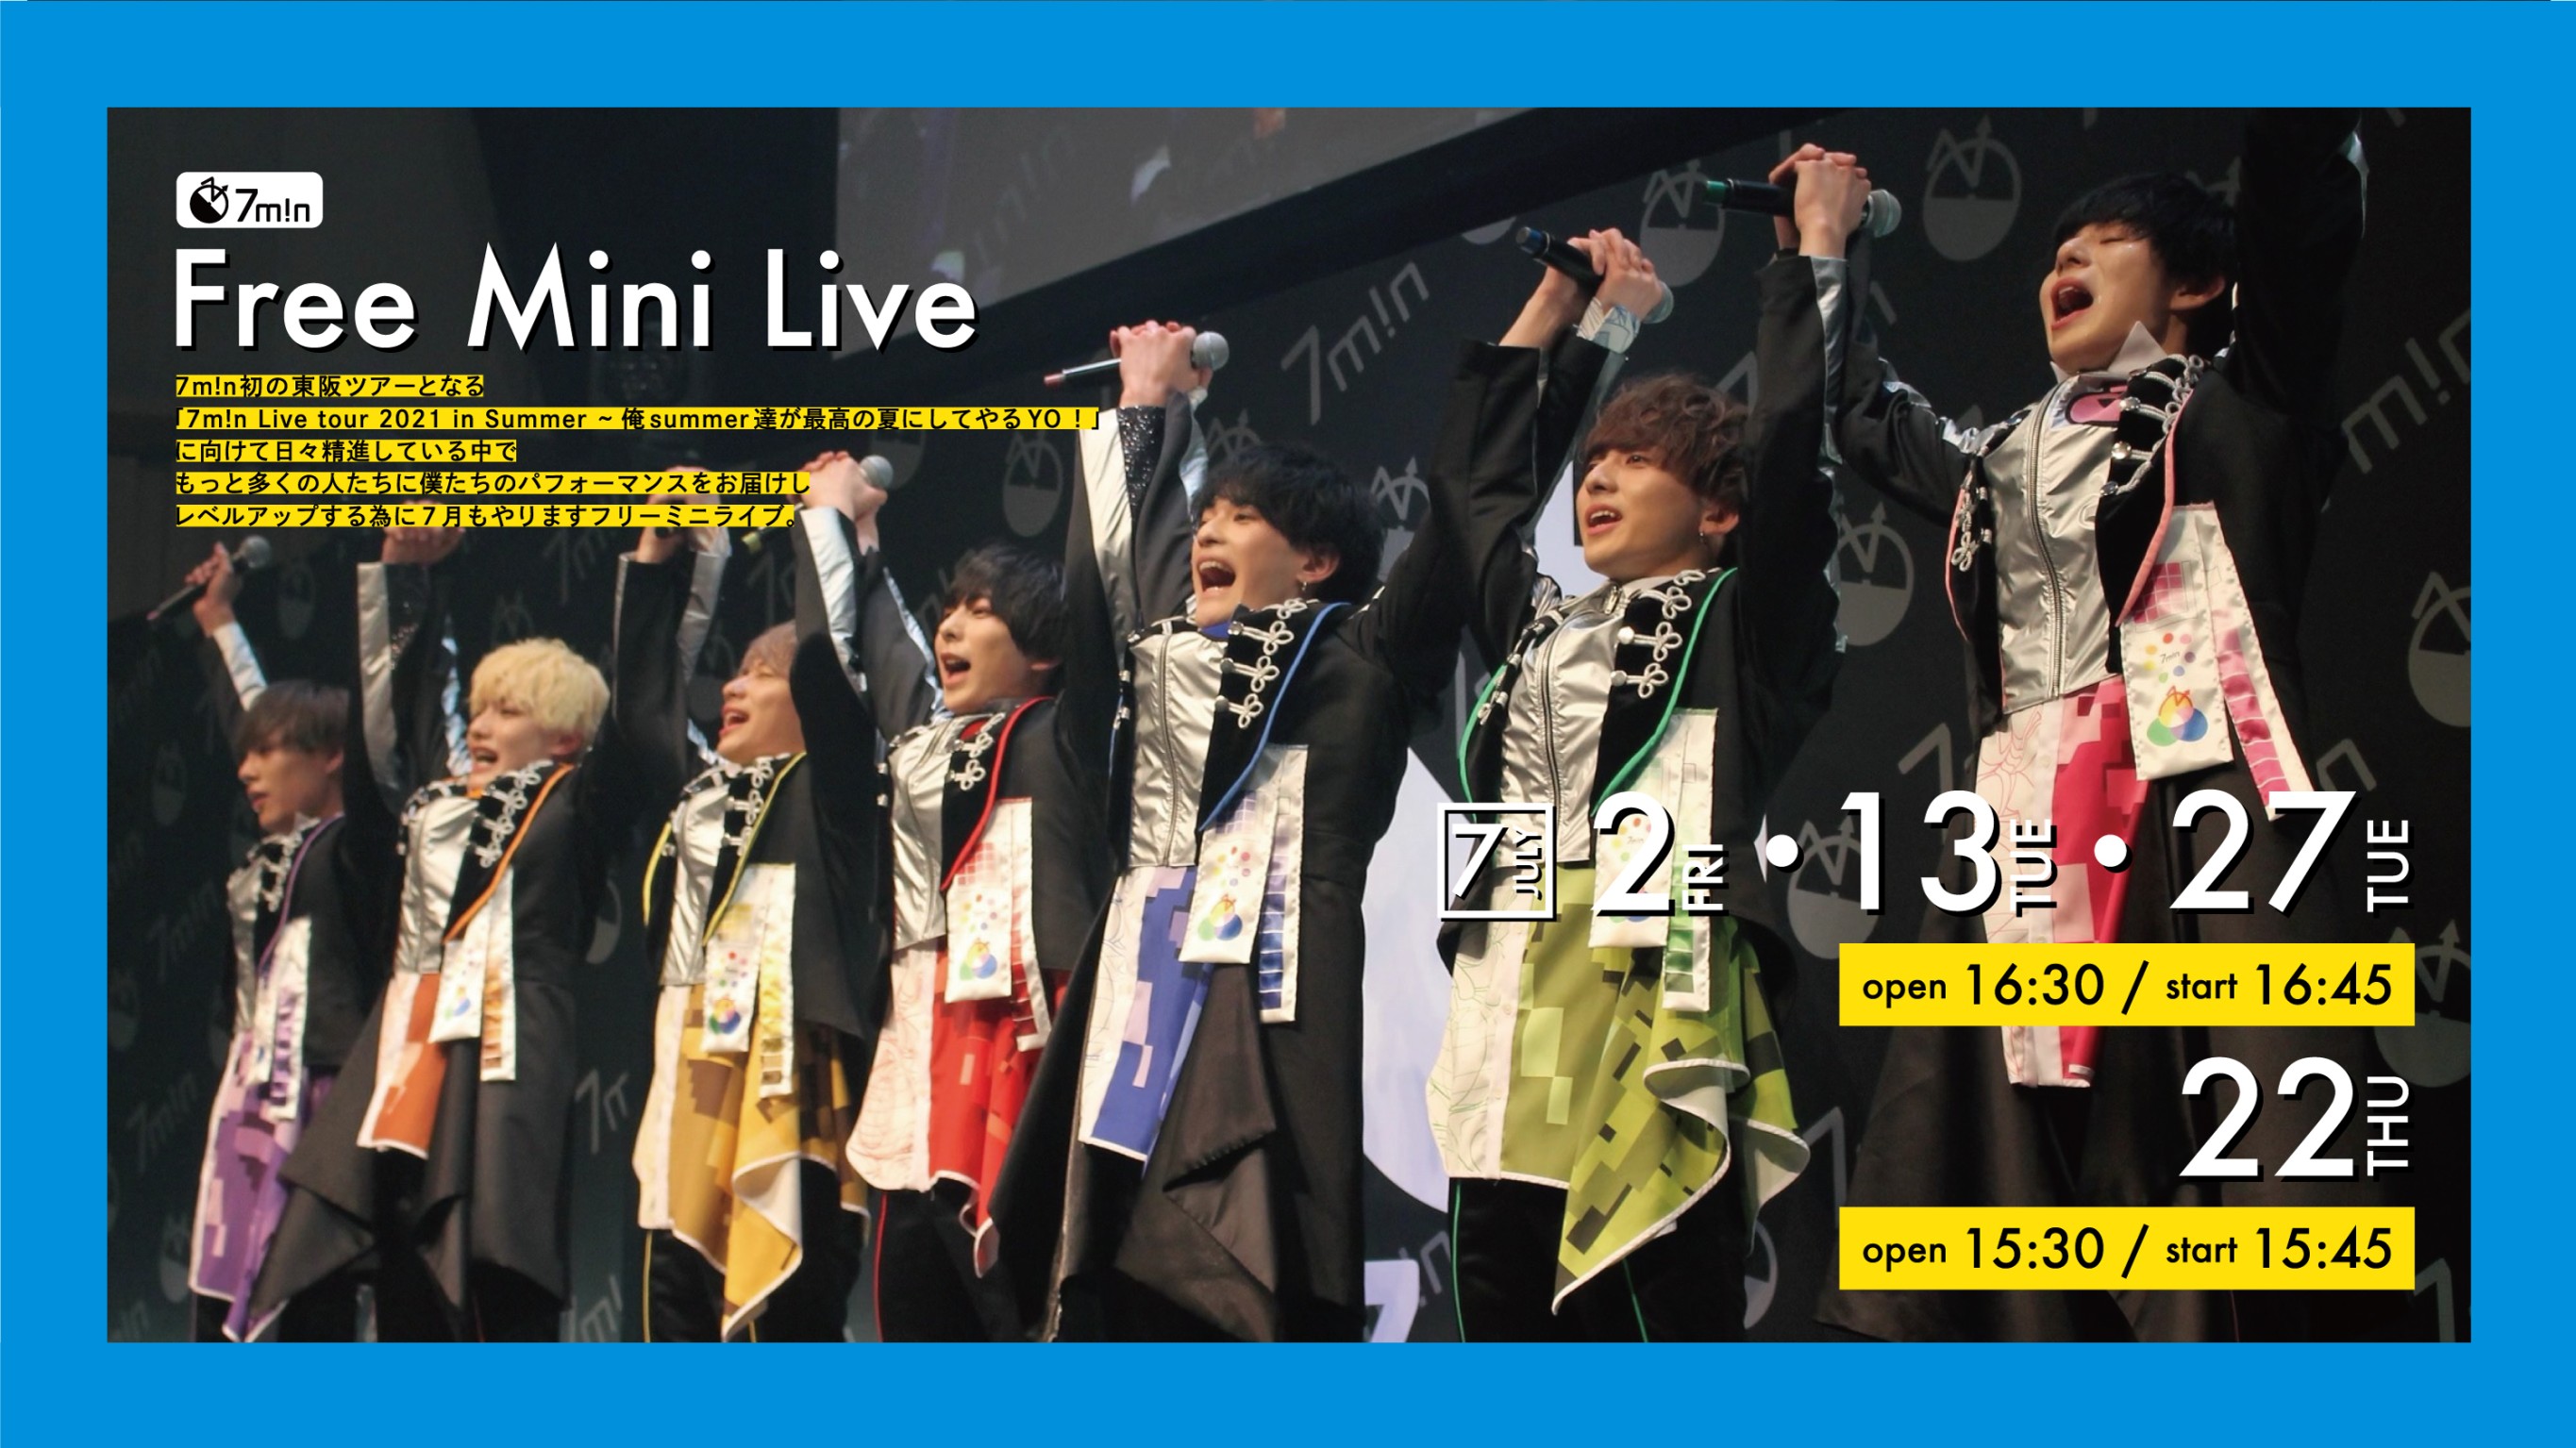 7m!n Free Mini Live -July-